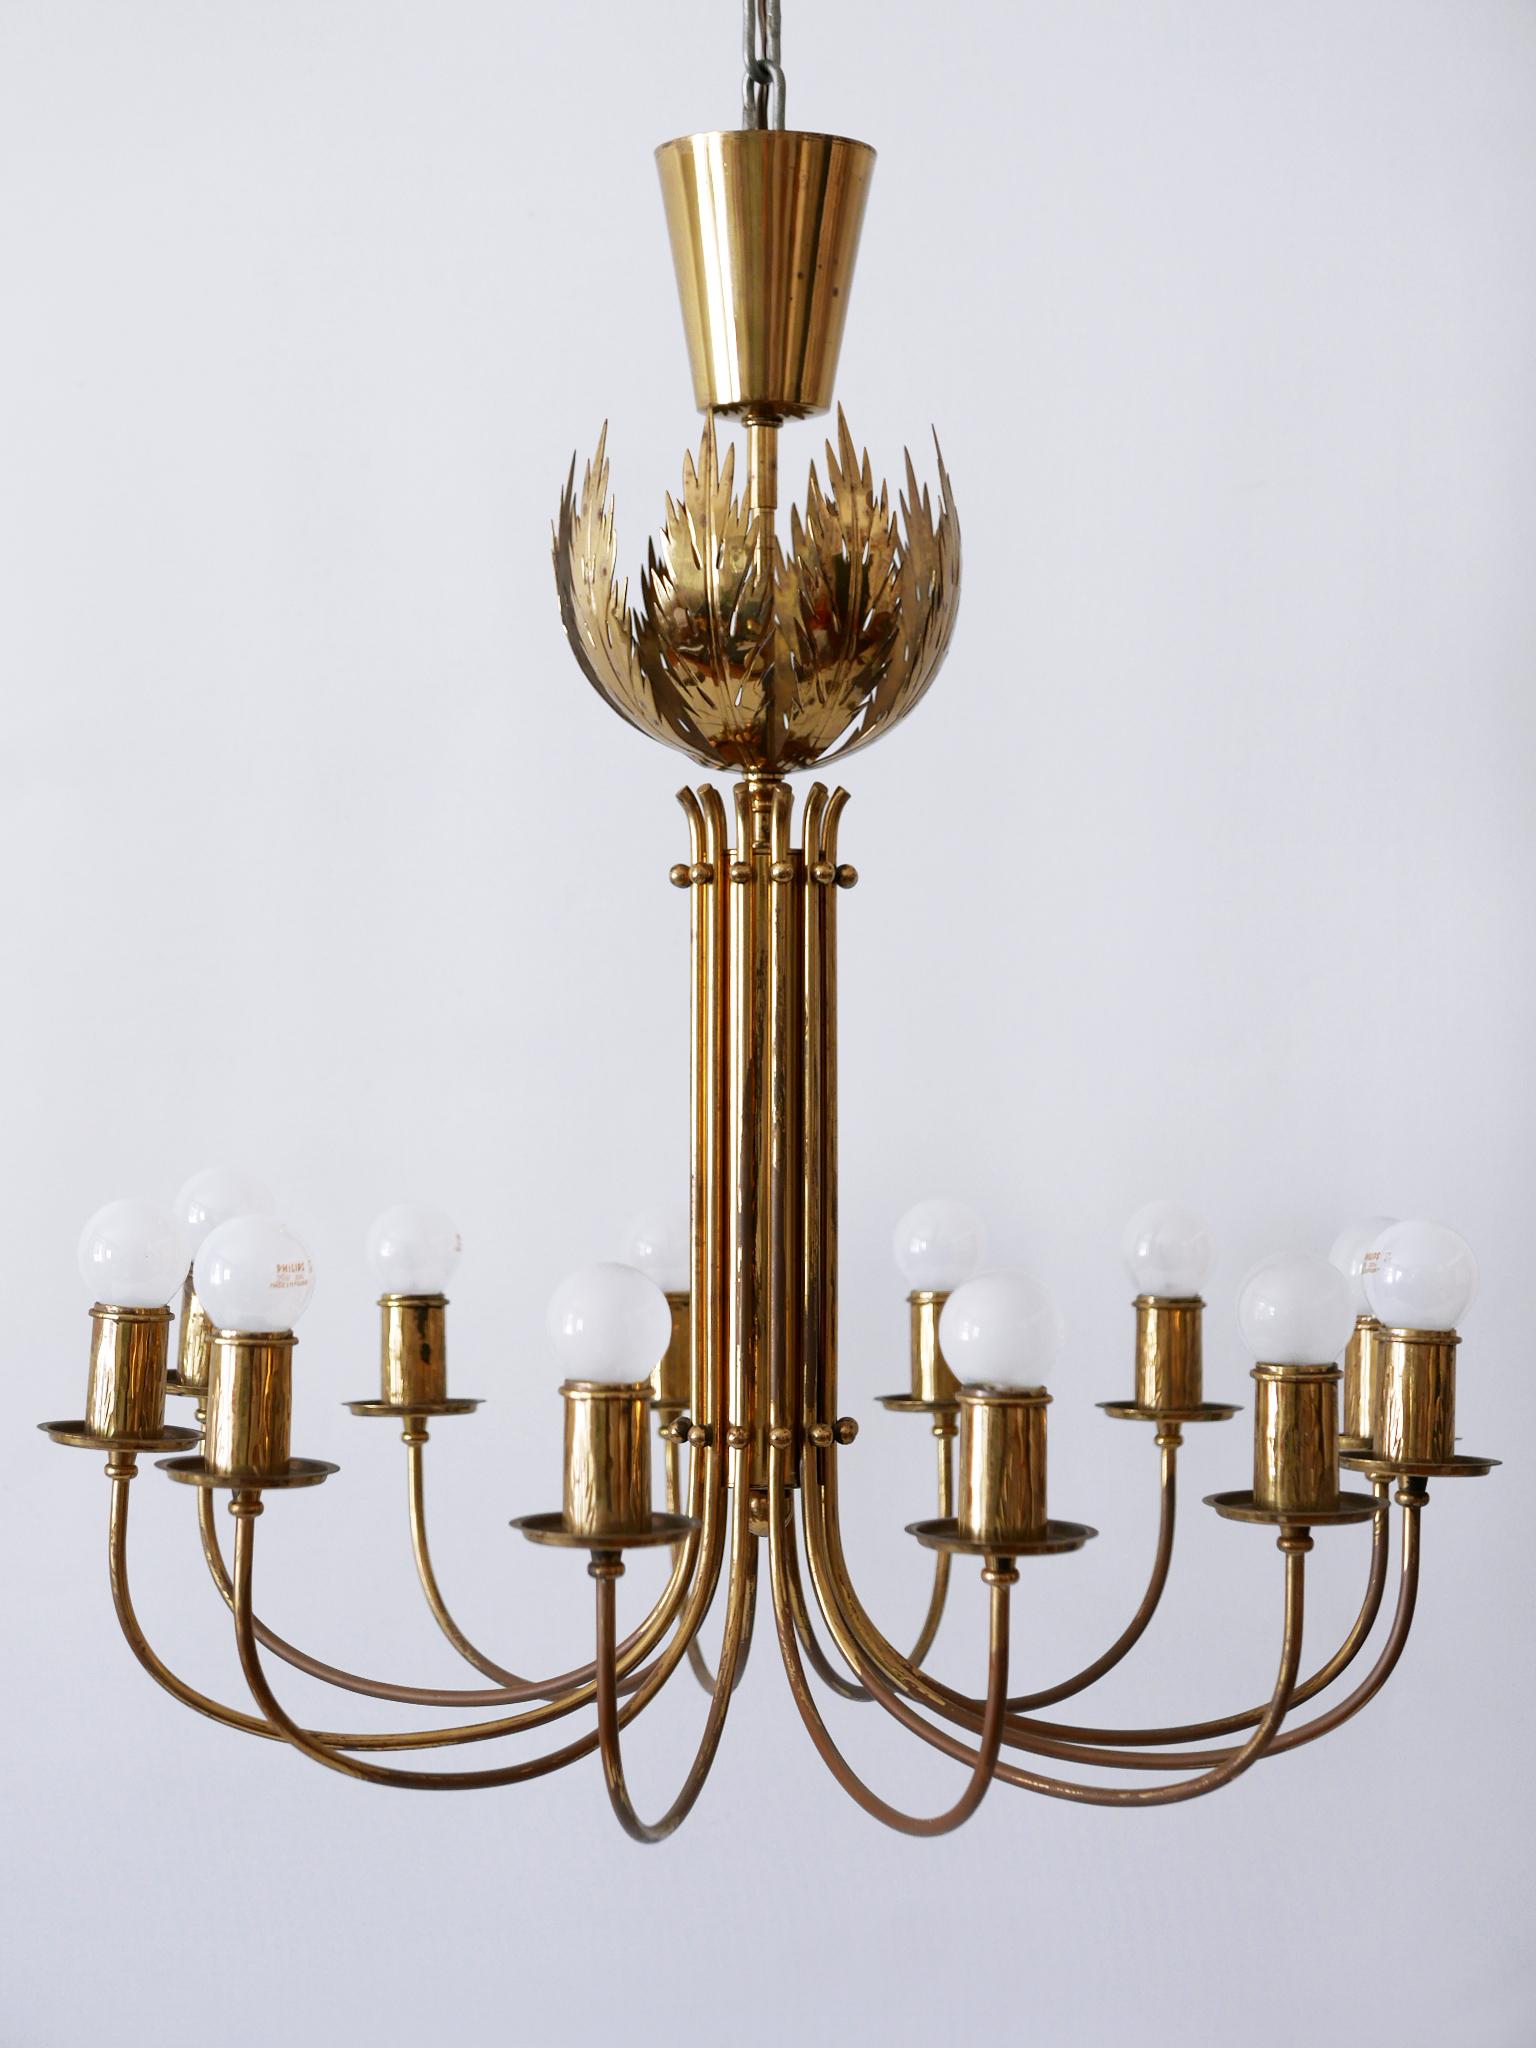 Rare 12-Armed Brass Chandeliers or Pendant Lamps by Vereinigte Werkstätten 1950s For Sale 5